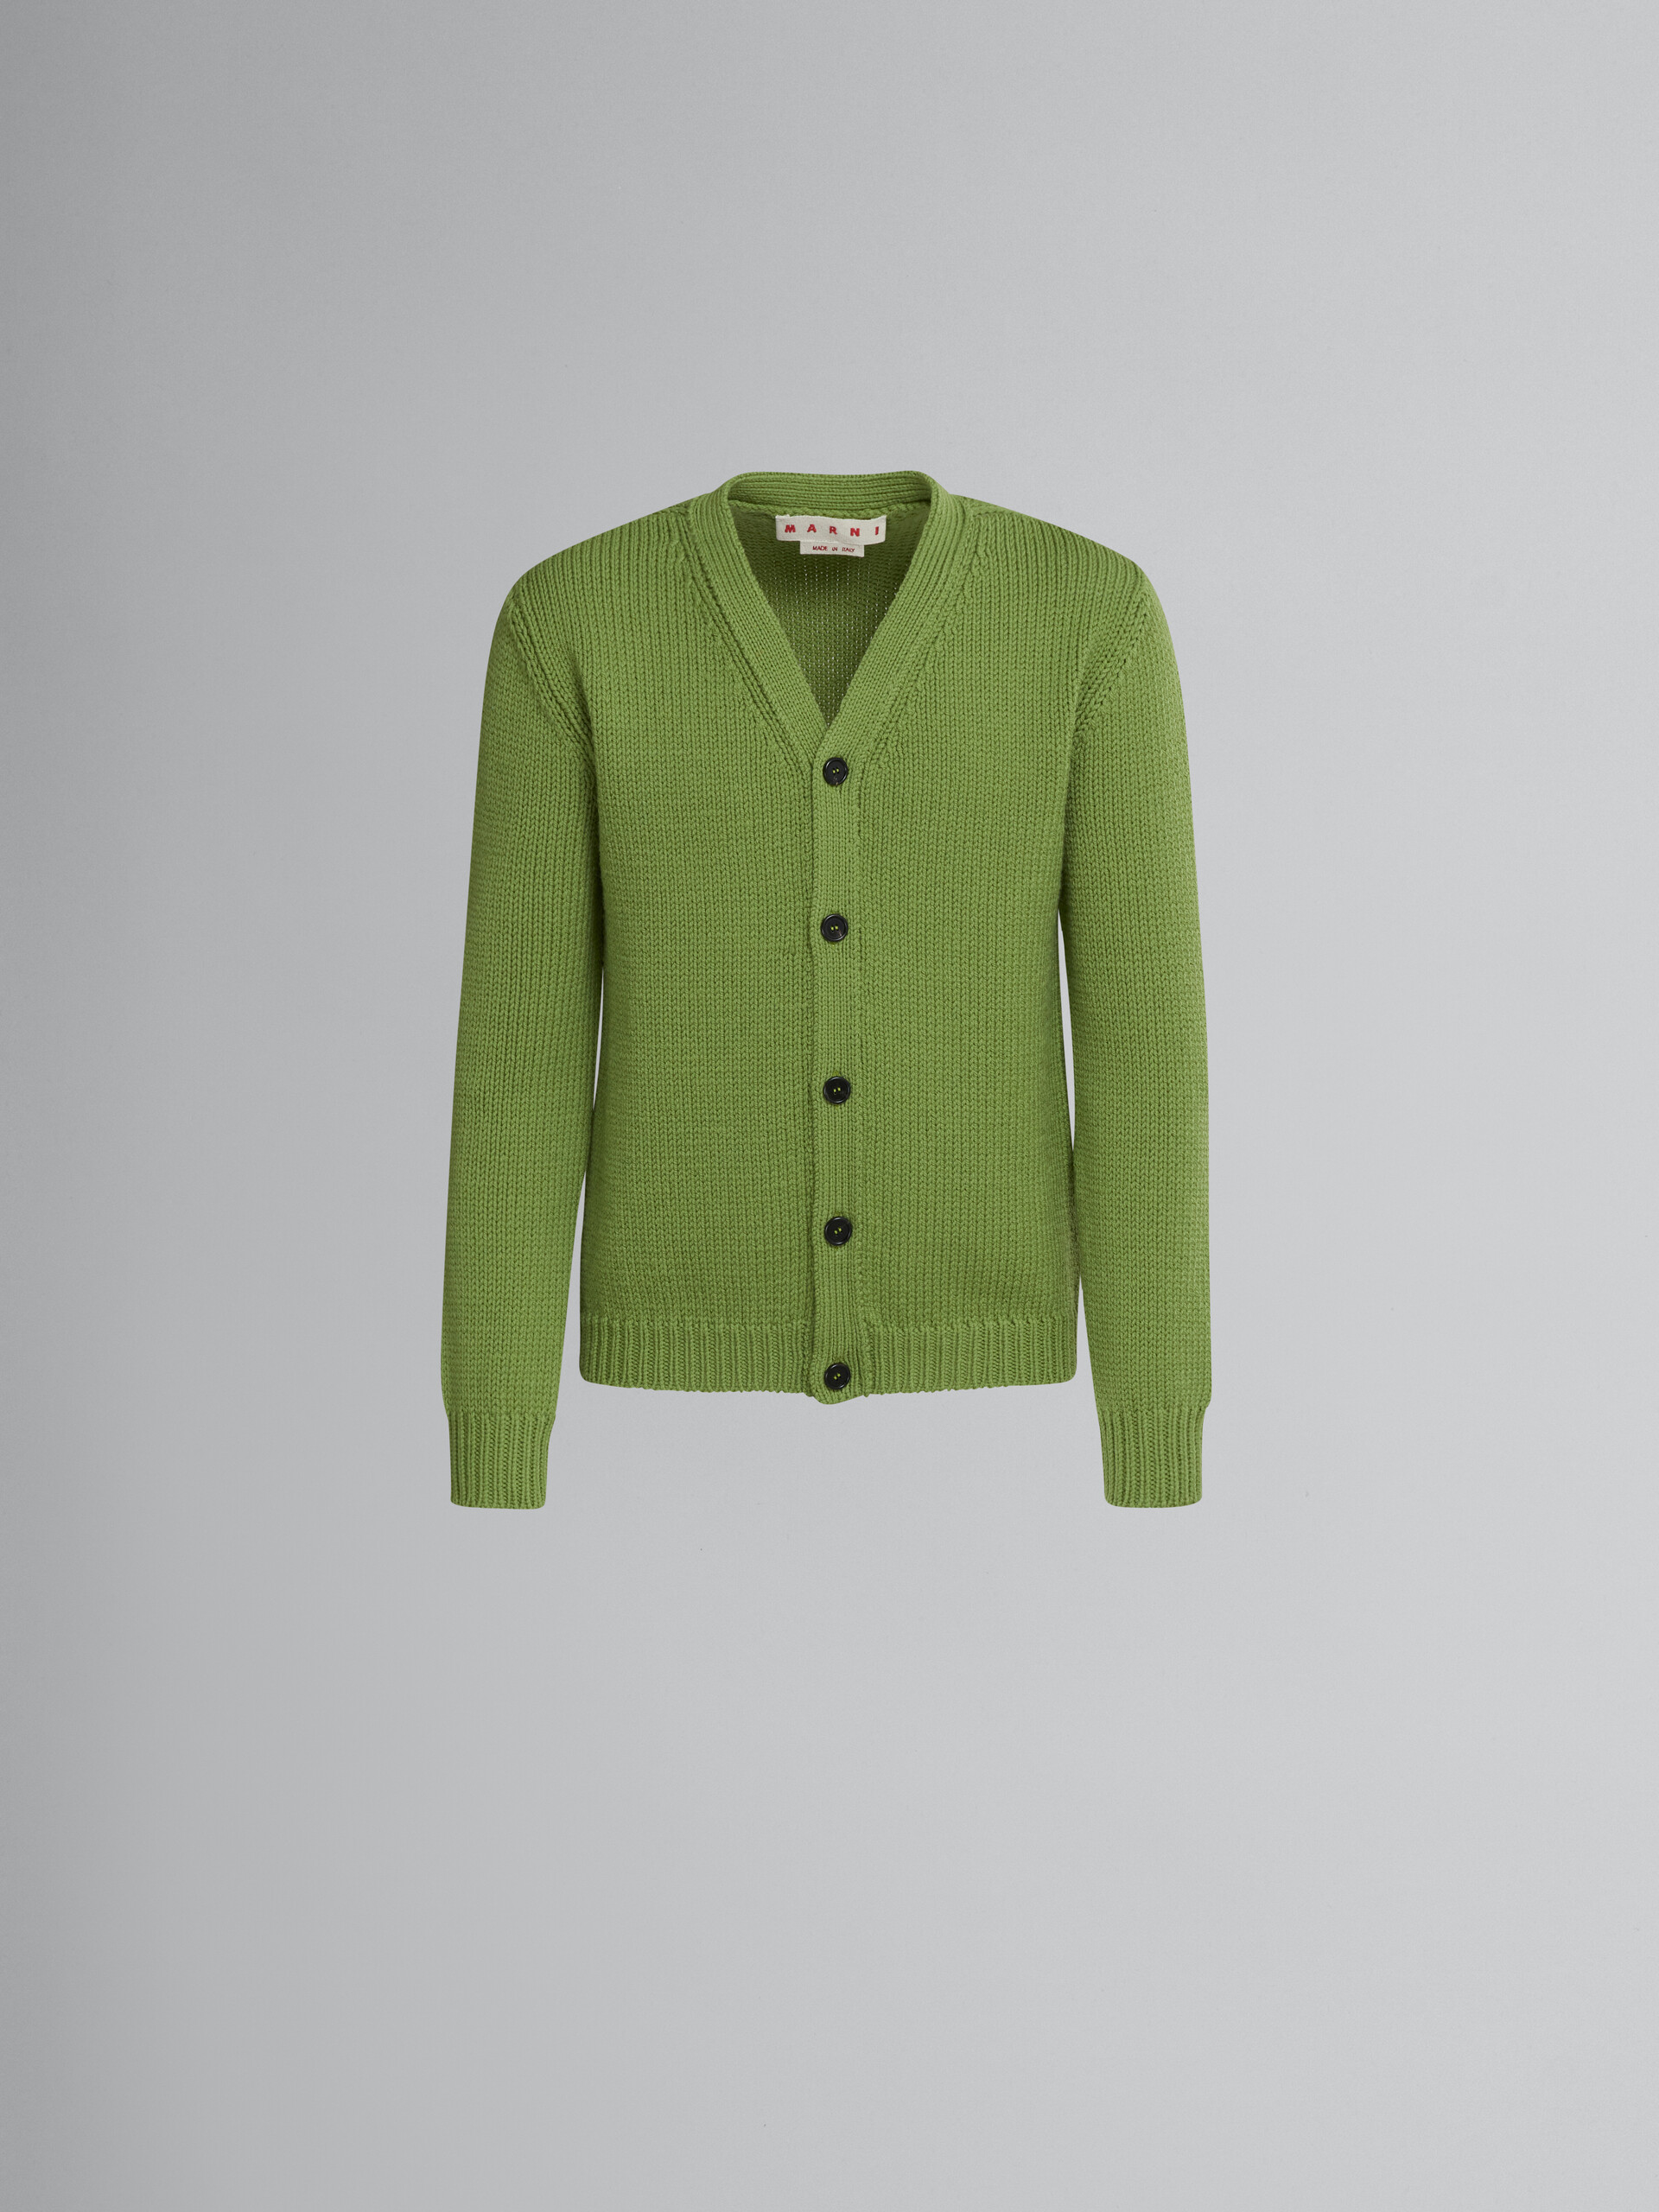 Green wool cardigan - Pullovers - Image 1